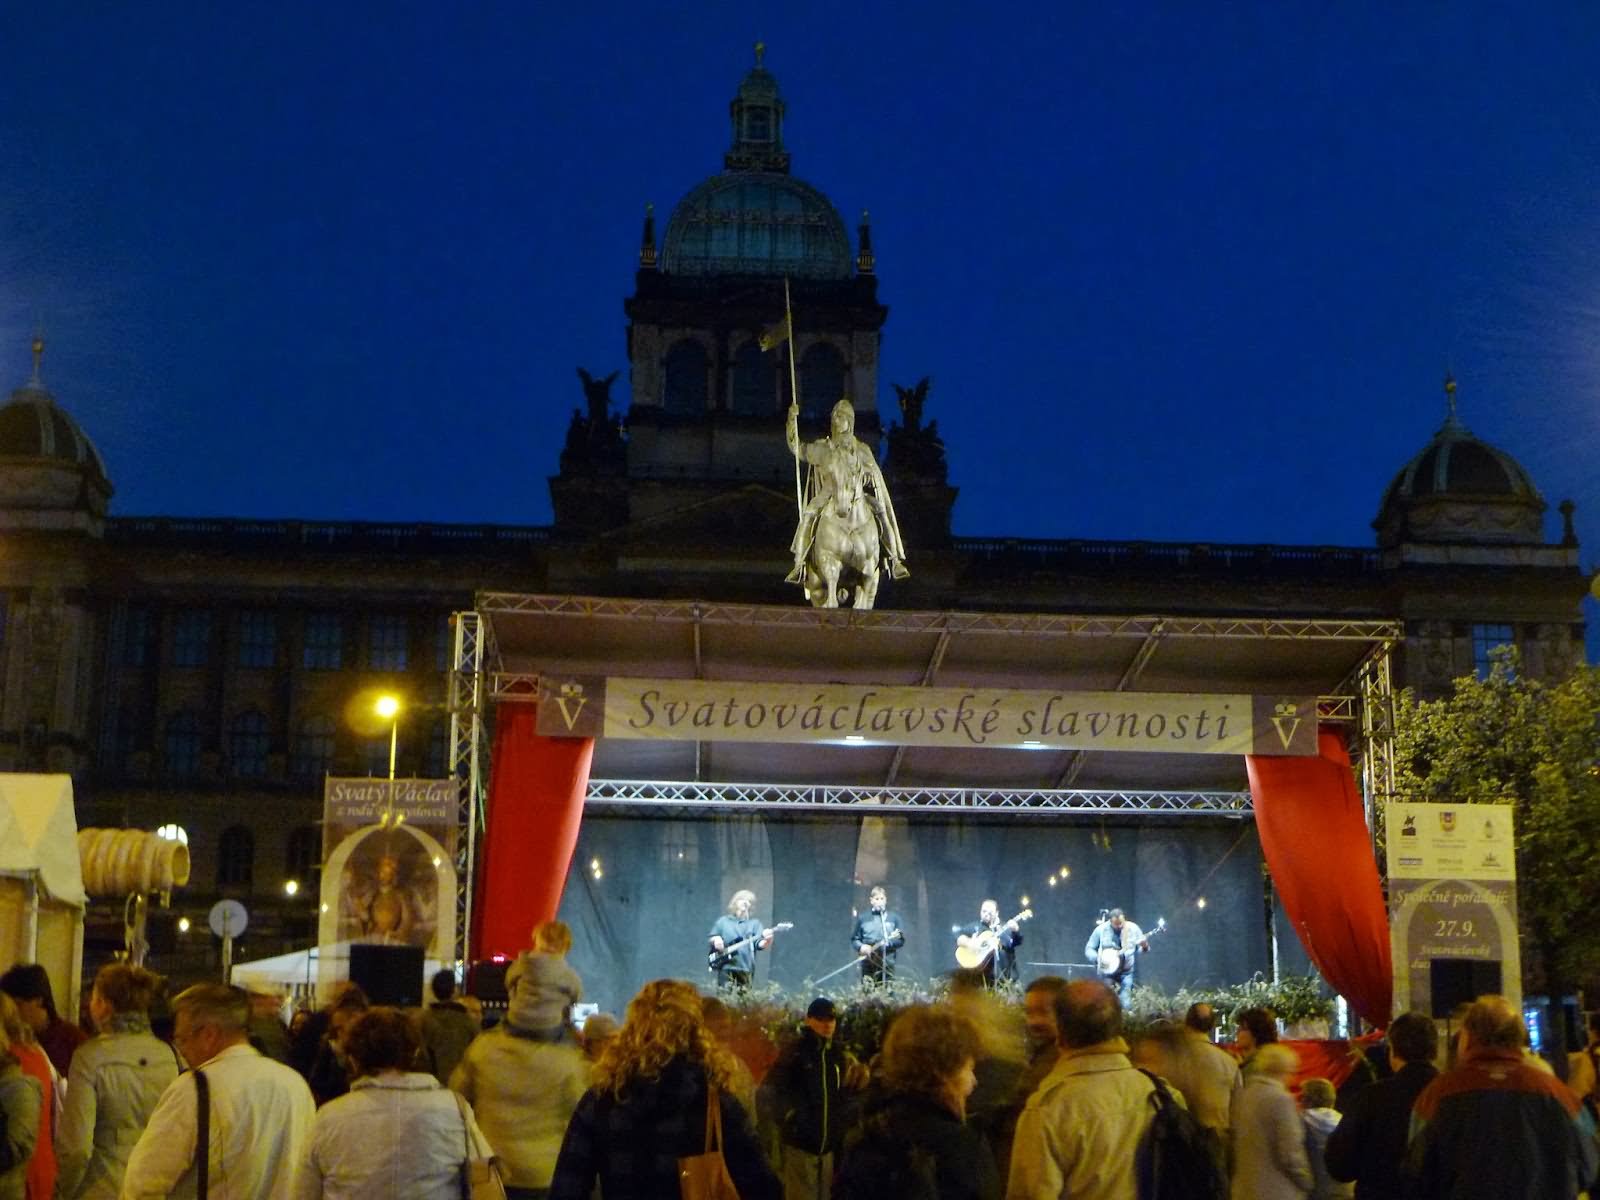 Saint Wenceslas Day Celebration At Wenceslas Square